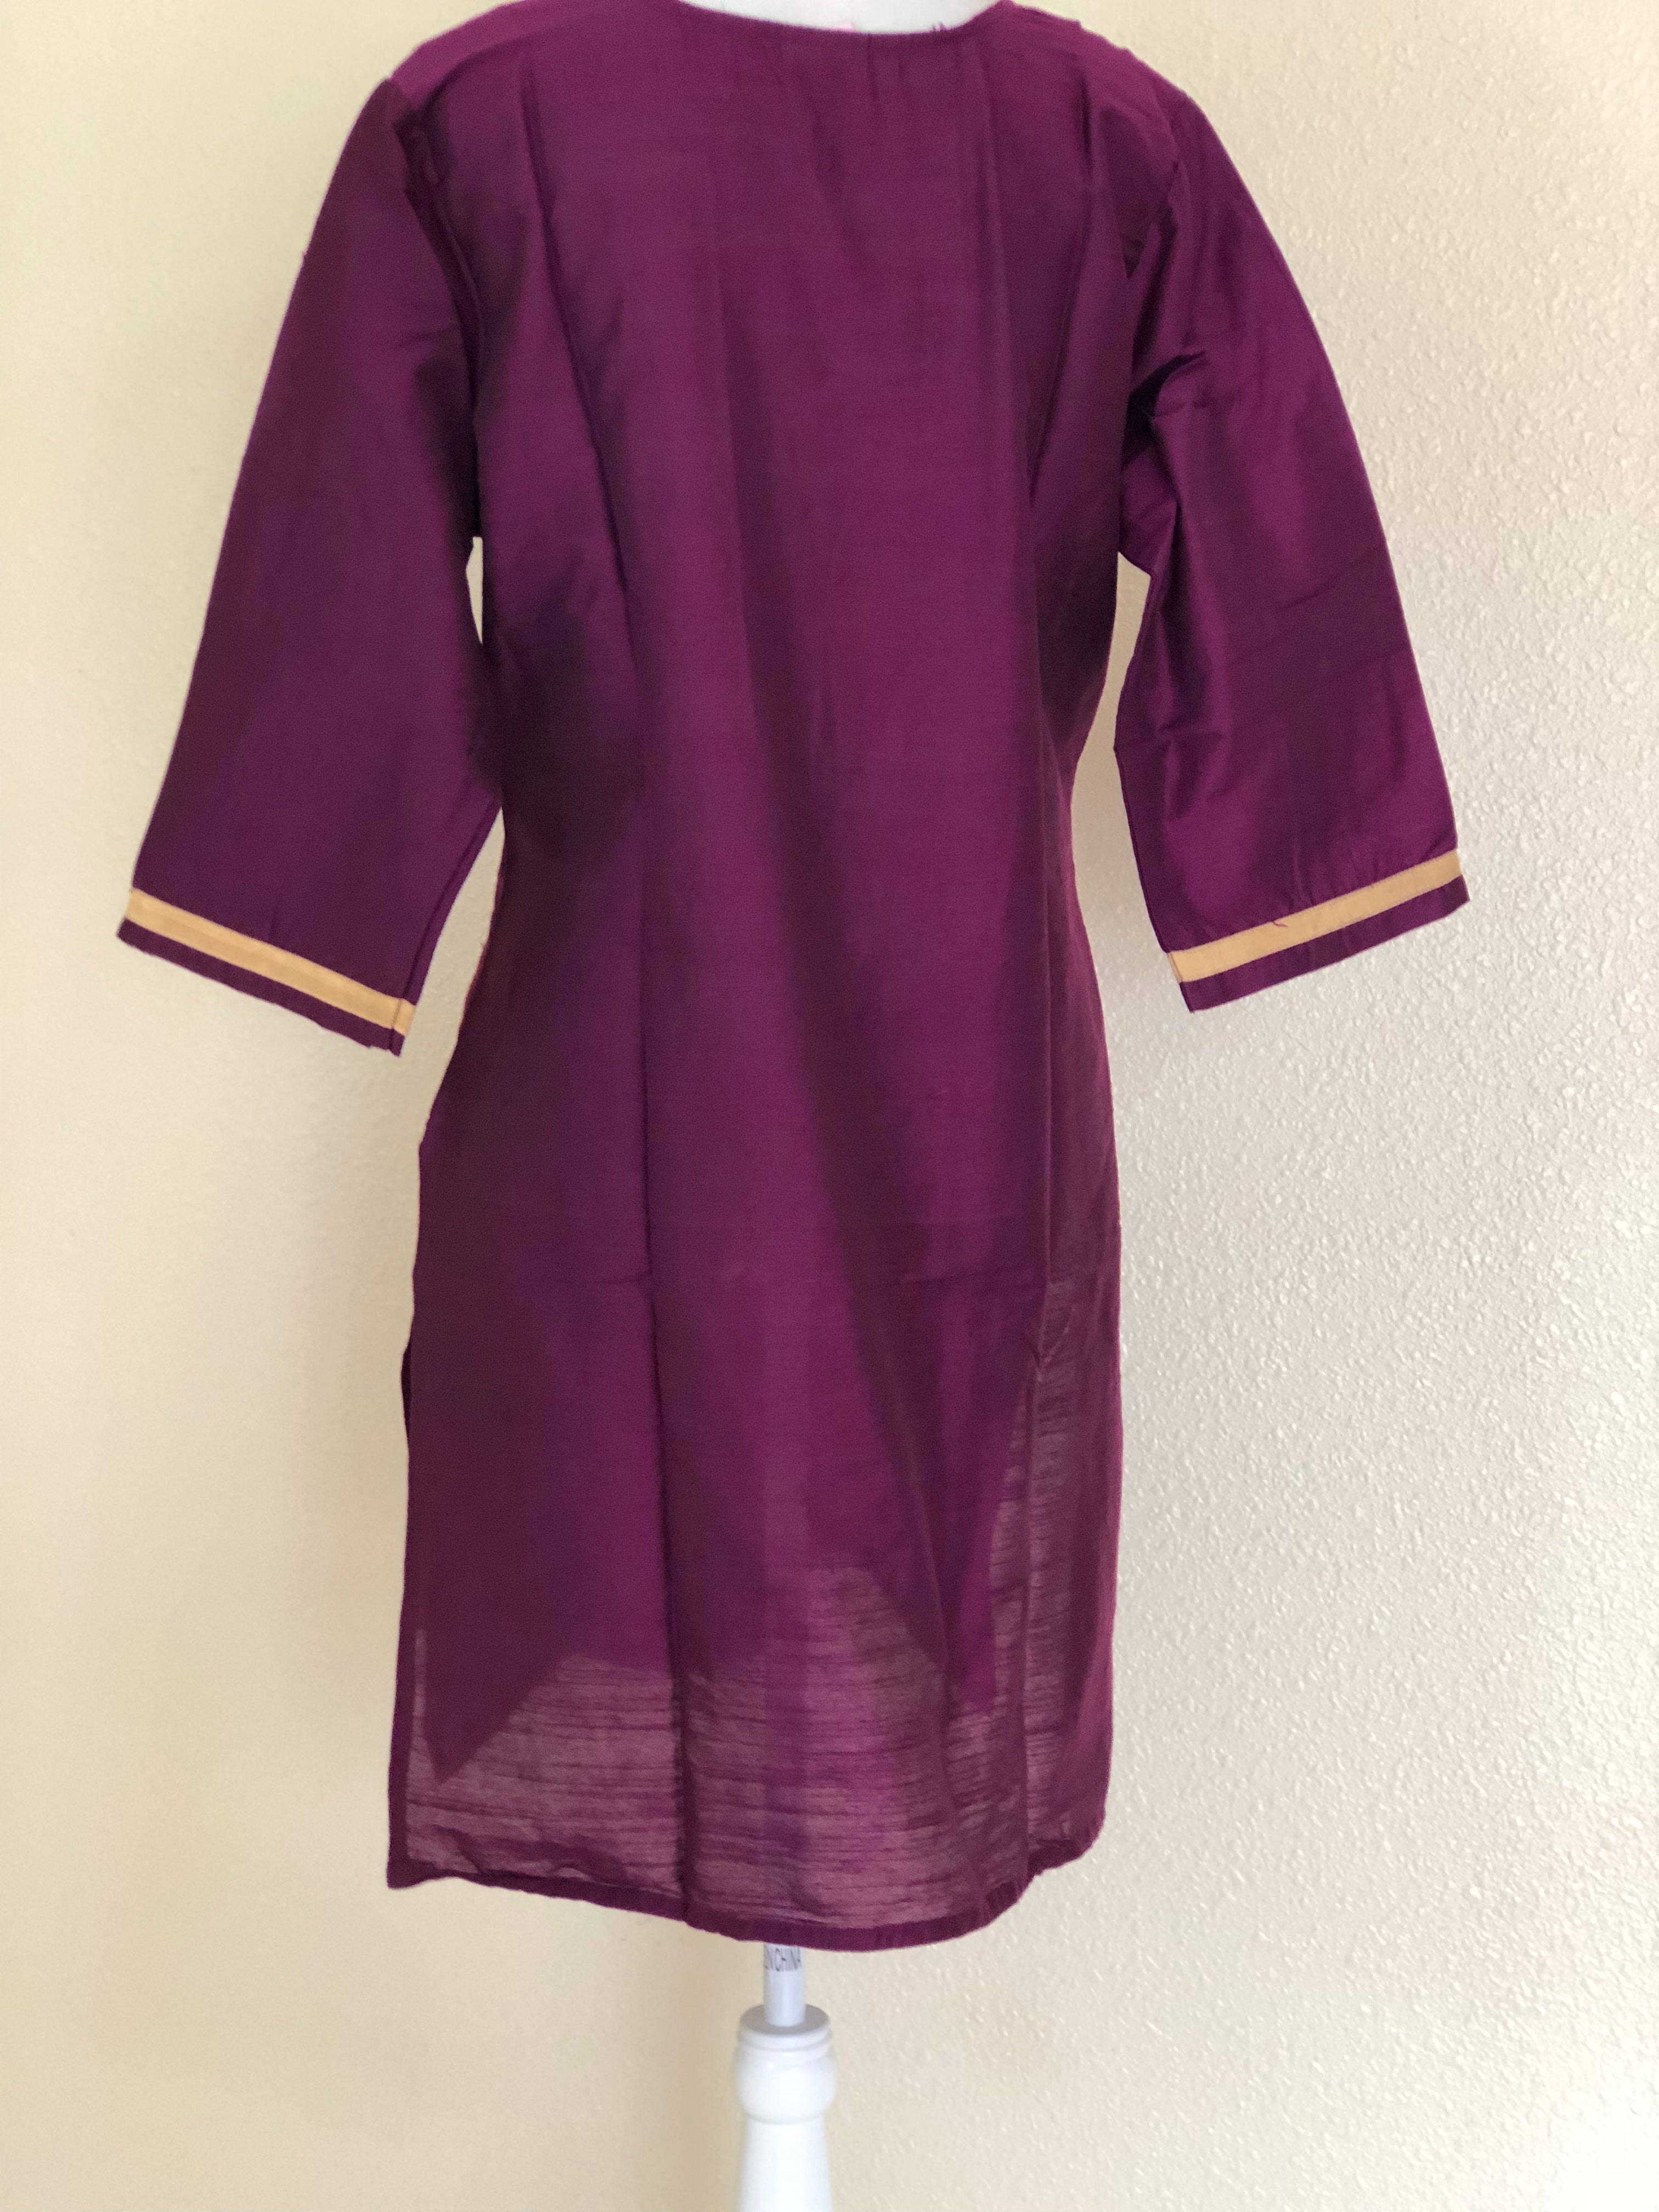 Purple Color - Pure Raw Silk Kurti Size Small/Medium - 30/32, Junior size. Big Girls size - 18 plus